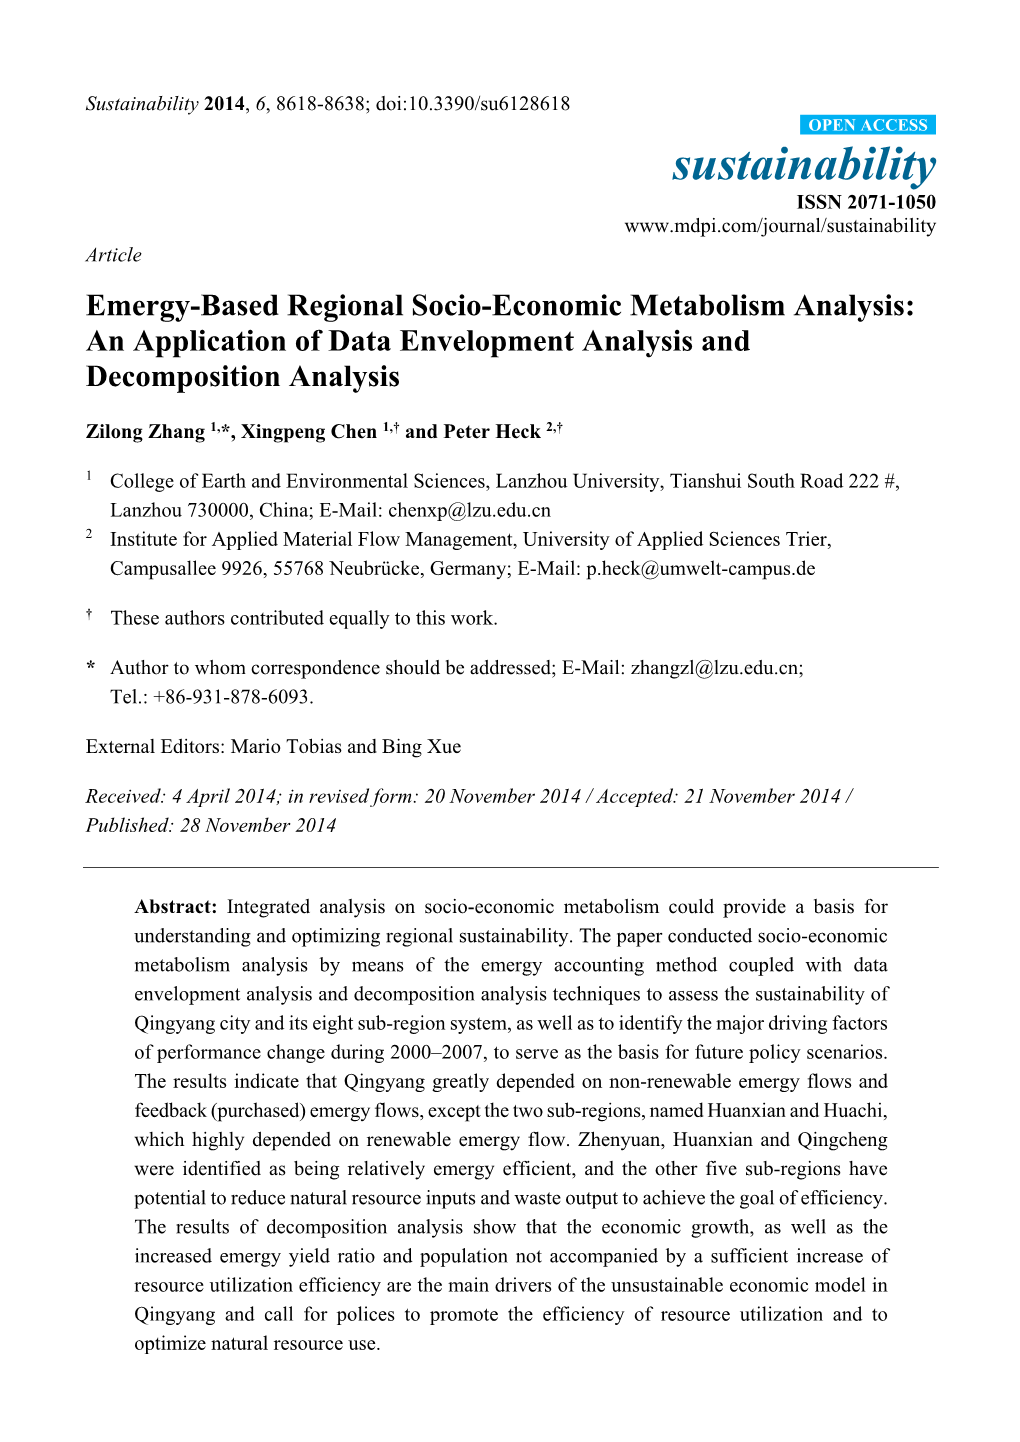 Emergy-Based Regional Socio-Economic Metabolism Analysis: an Application of Data Envelopment Analysis and Decomposition Analysis